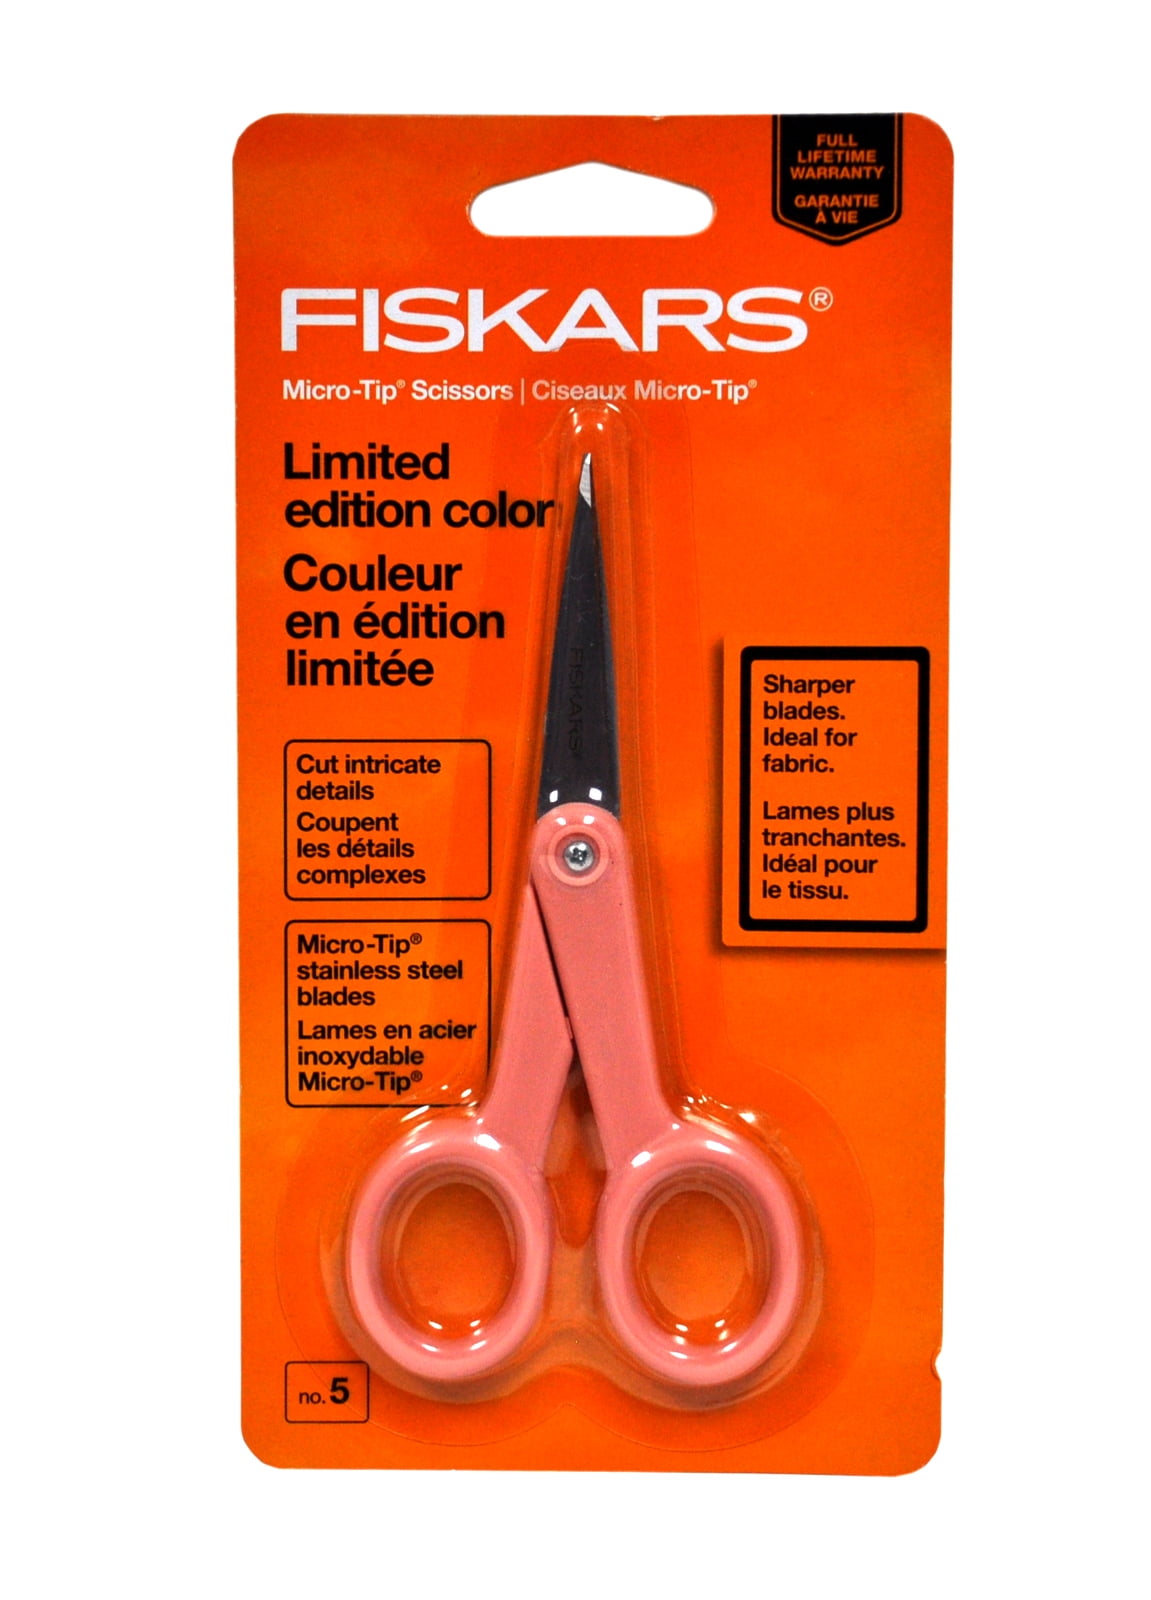 Fiskars Essential Sewing Scissors 2 Pc Set Limited Edition no.5 Micro